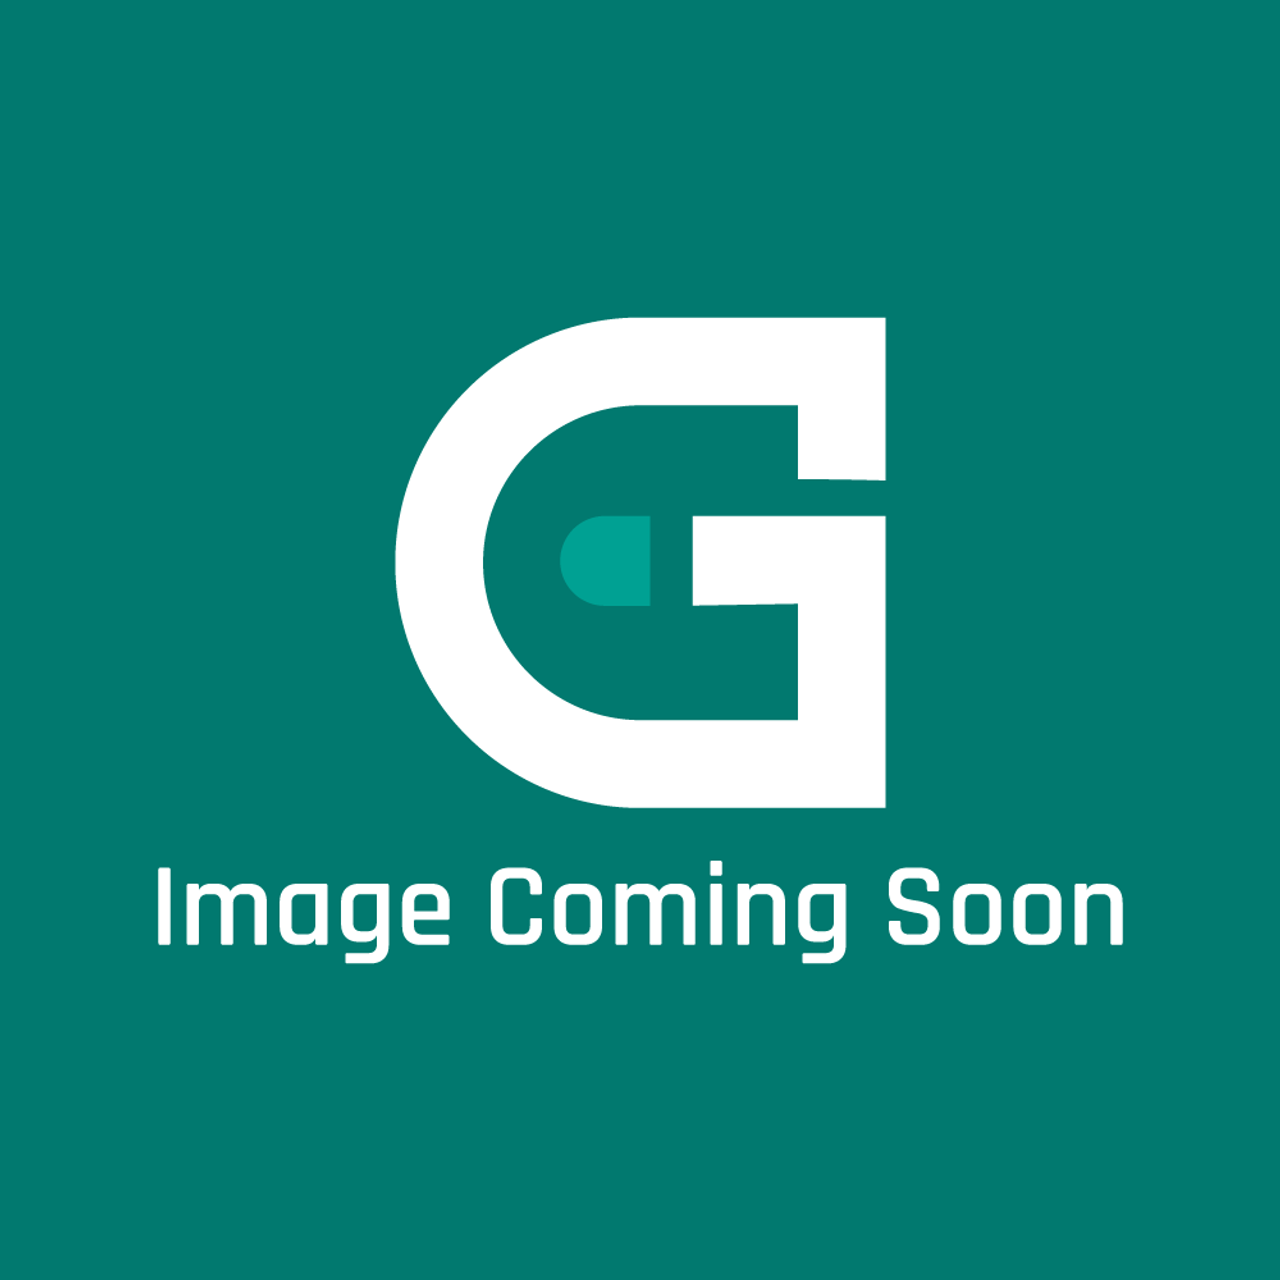 GE Appliances WB36X24893 - Backguard Range - Image Coming Soon!